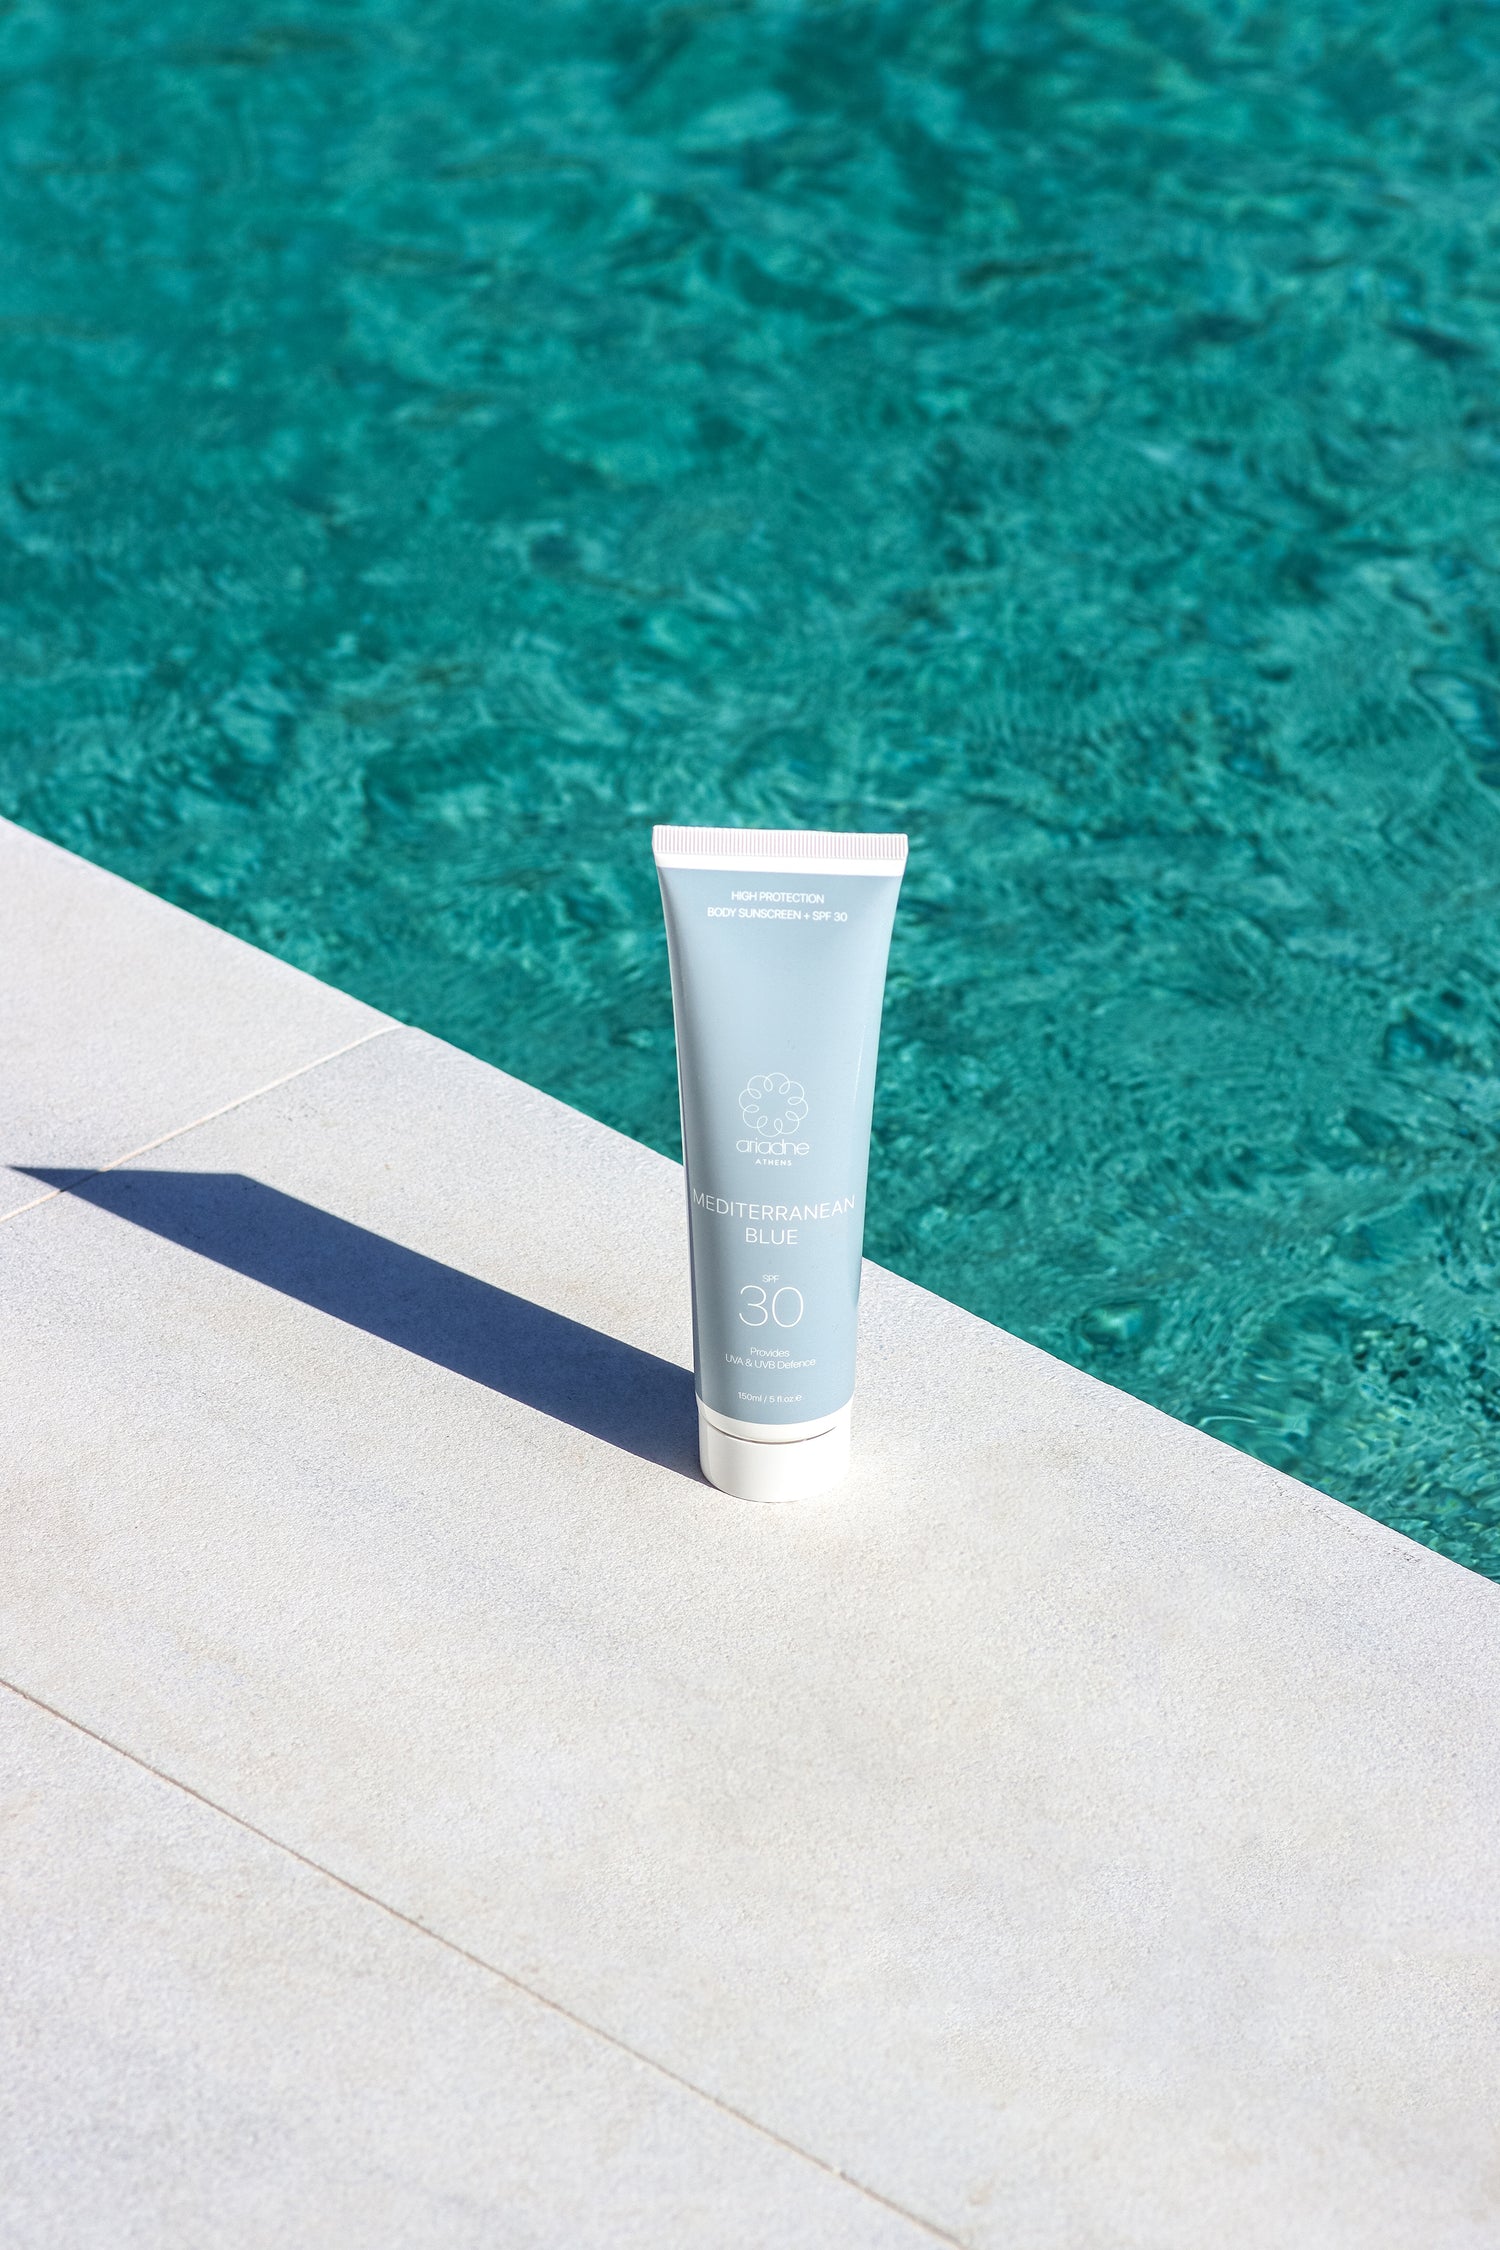 The Mediterranean Blue Sunscreen SPF30 near the pool.